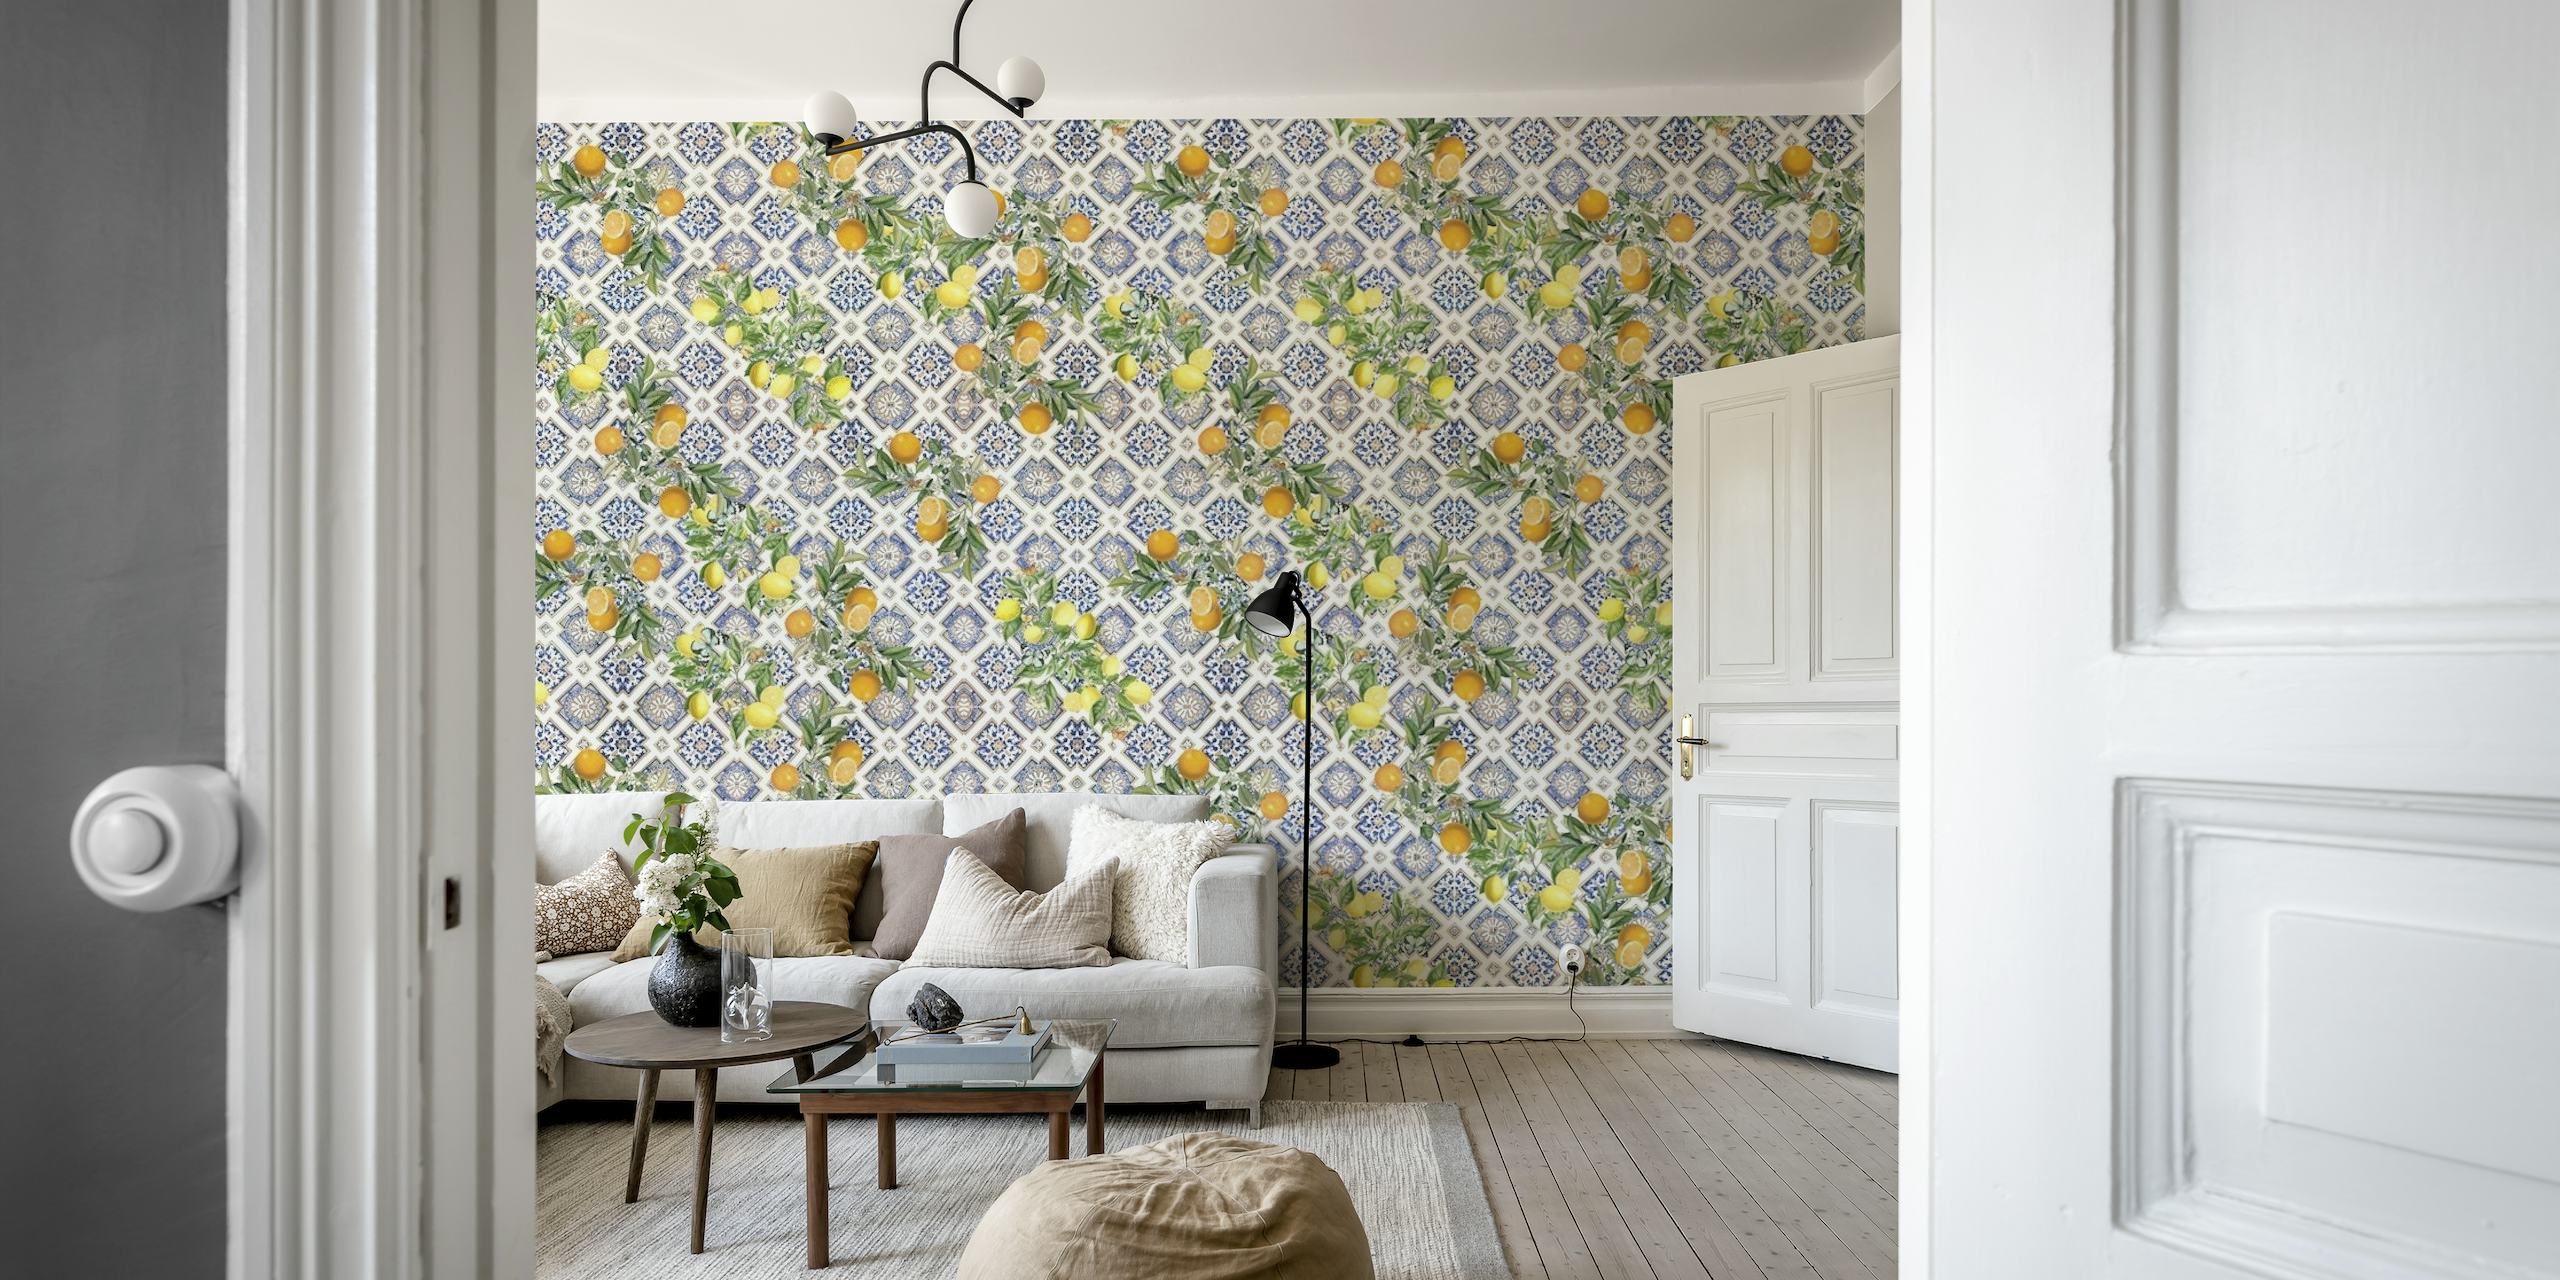 Mediterranean Blue tiles and citrus fruit pattern papel pintado